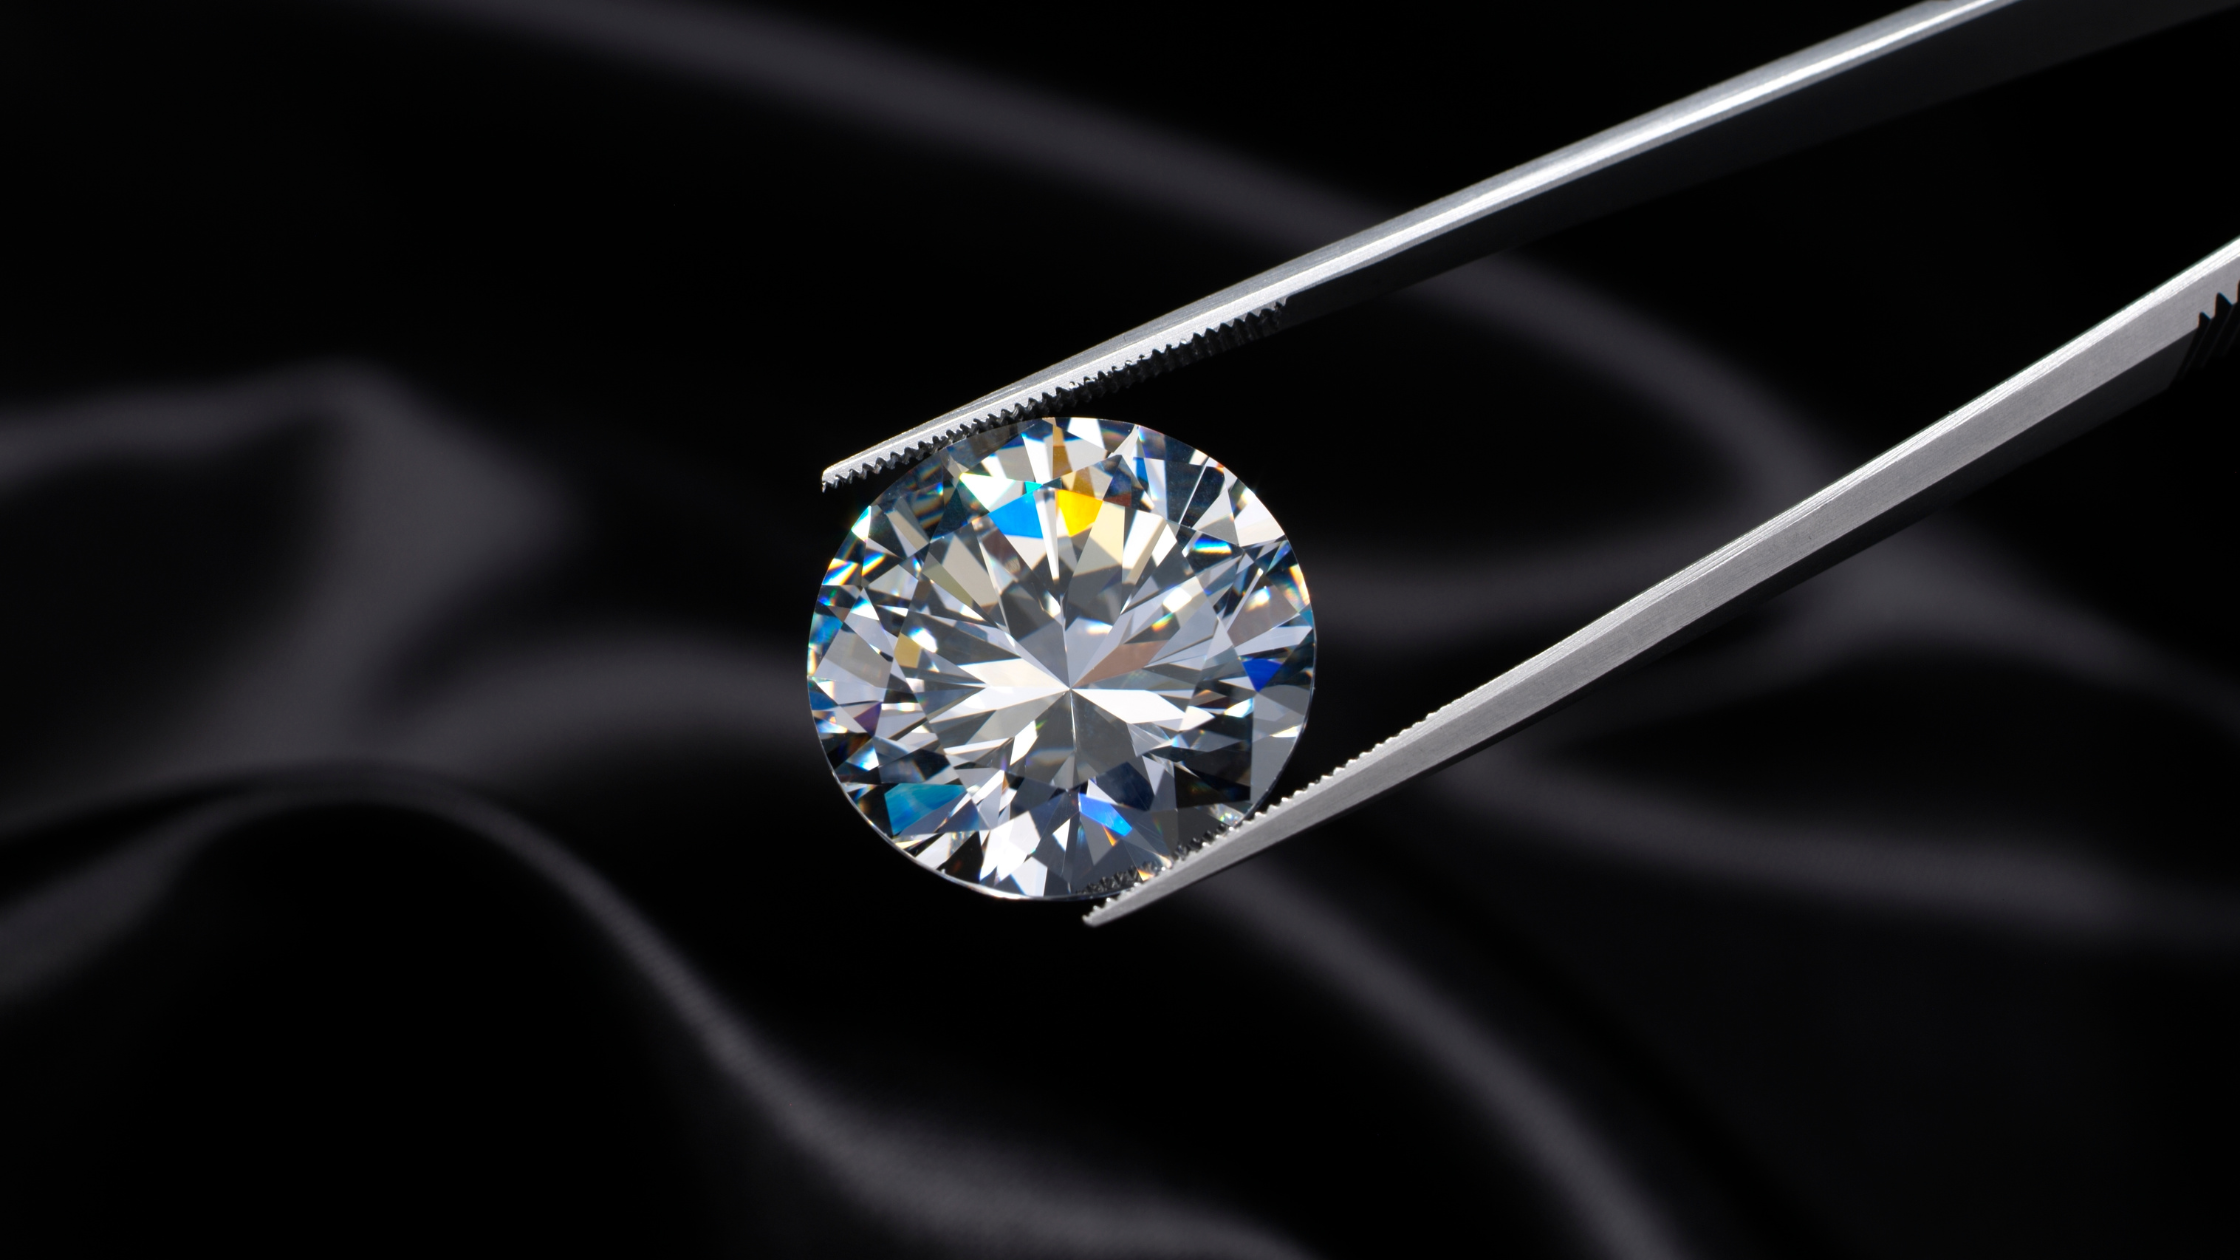 lab-grown diamonds vs natural diamonds: the ultimate durability test